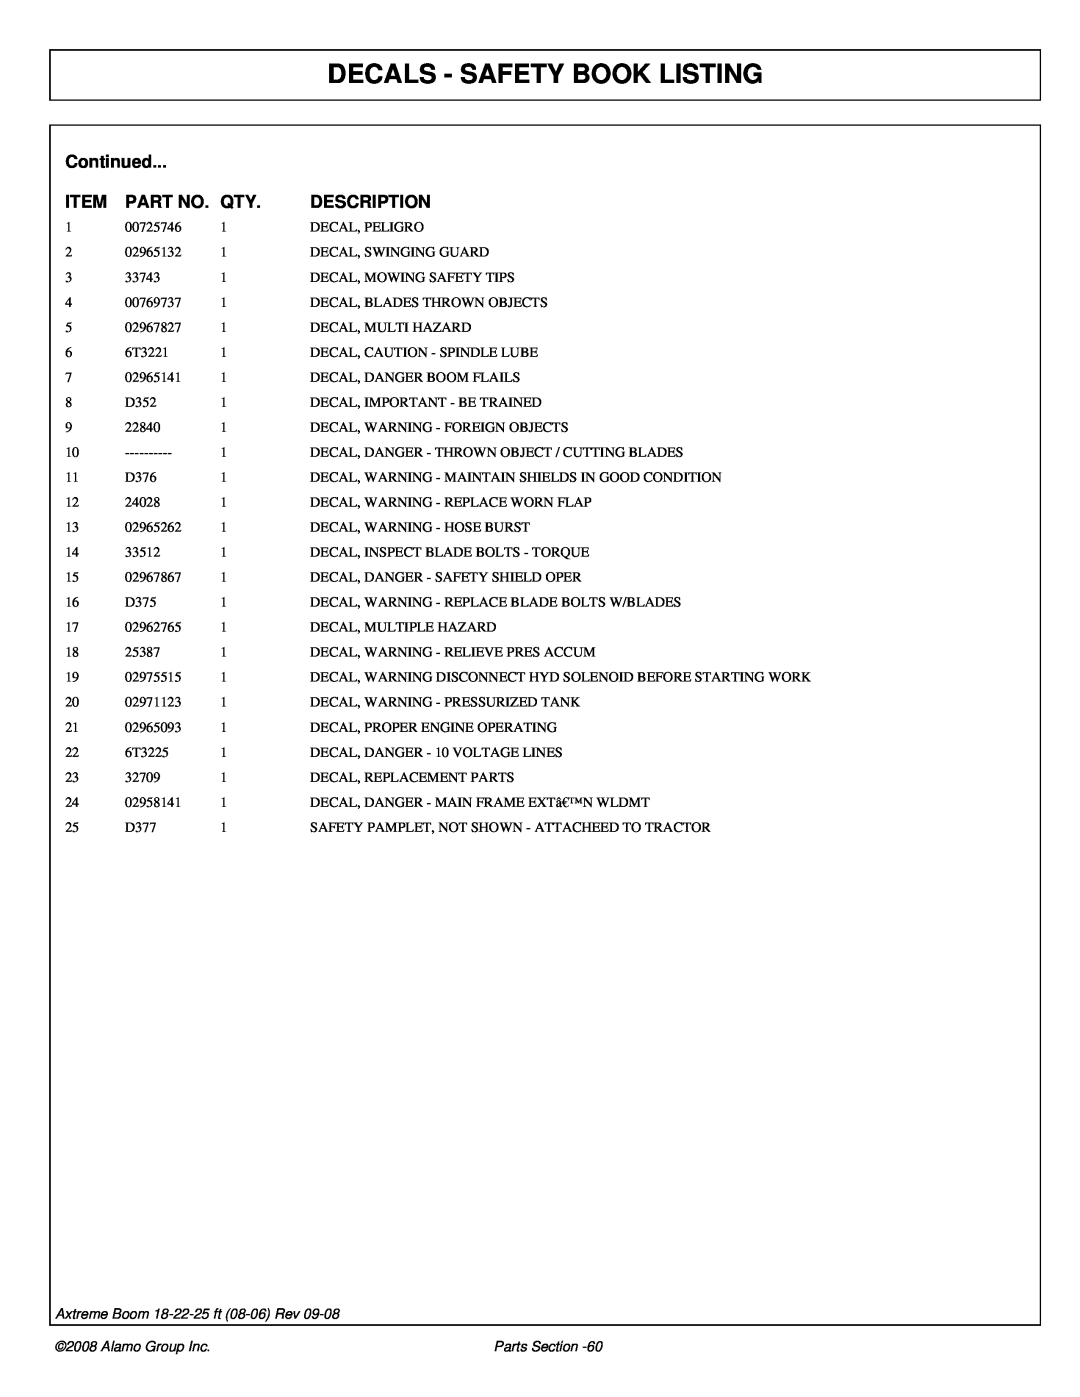 Alamo FC-P-0002 Decals - Safety Book Listing, Continued, Part No. Qty, Description, Axtreme Boom 18-22-25 ft 08-06 Rev 